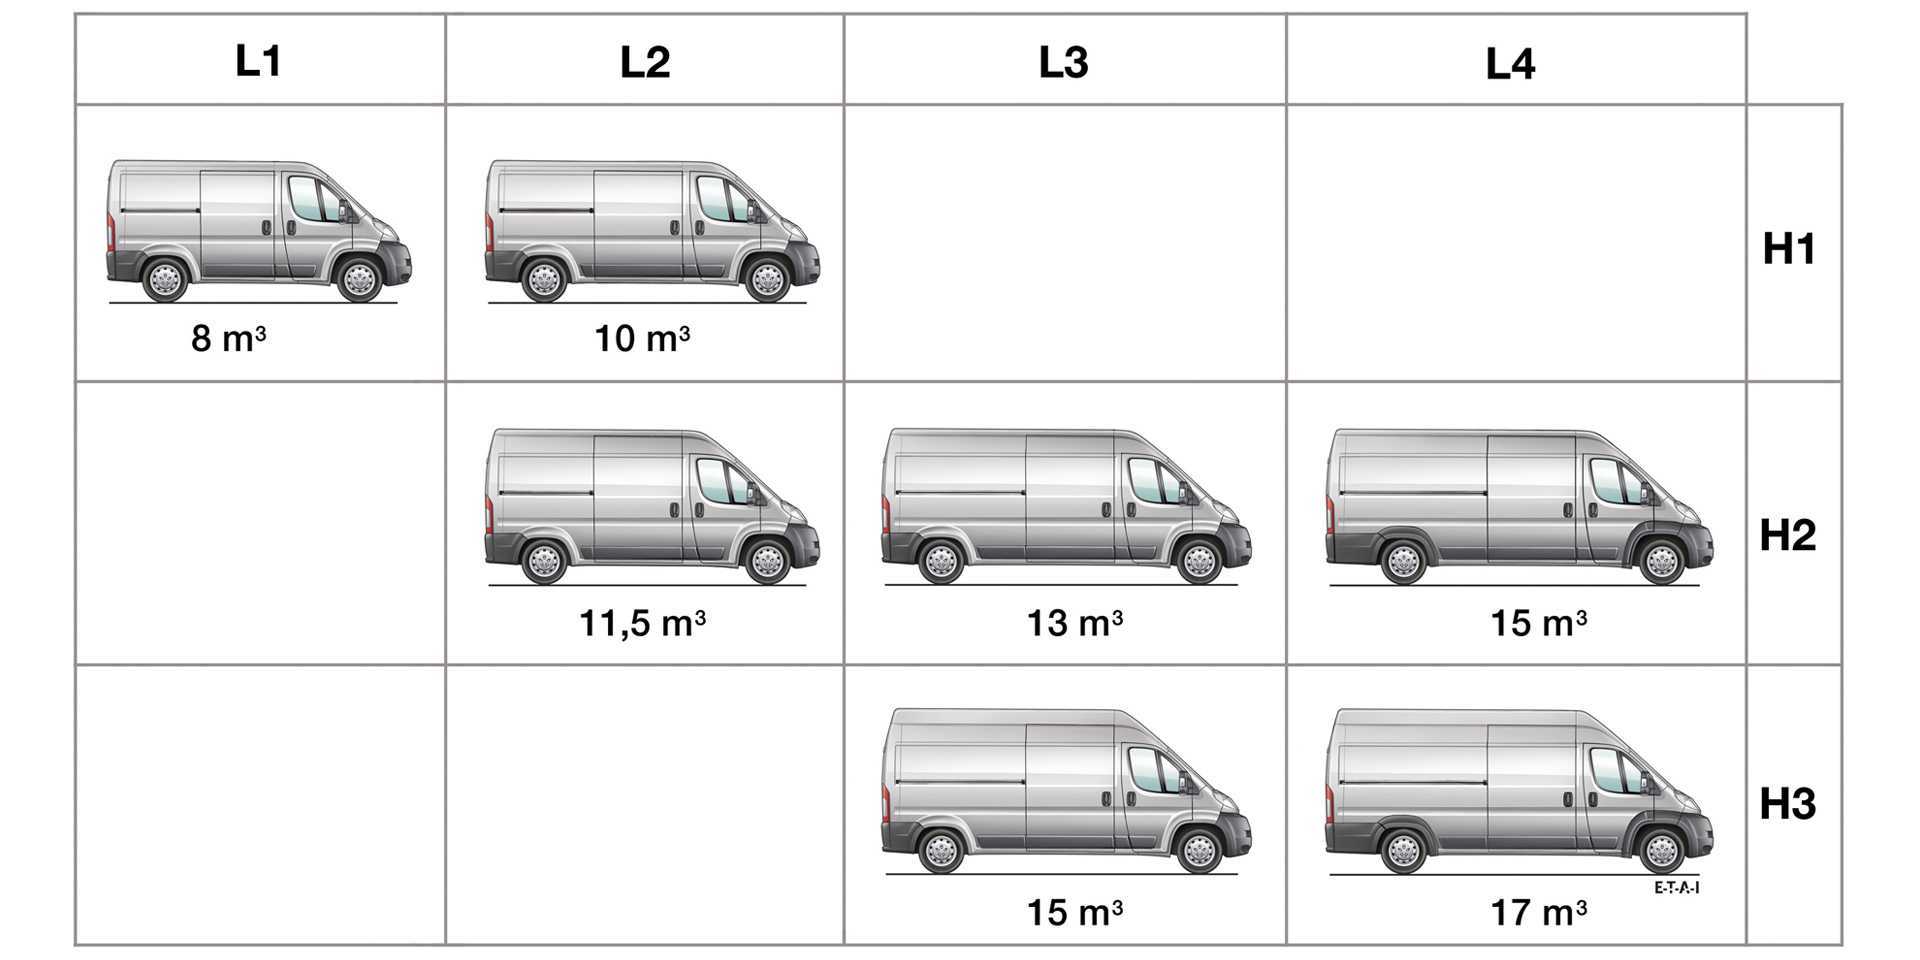 Фургон пежо - описание грузовика (характеристики)